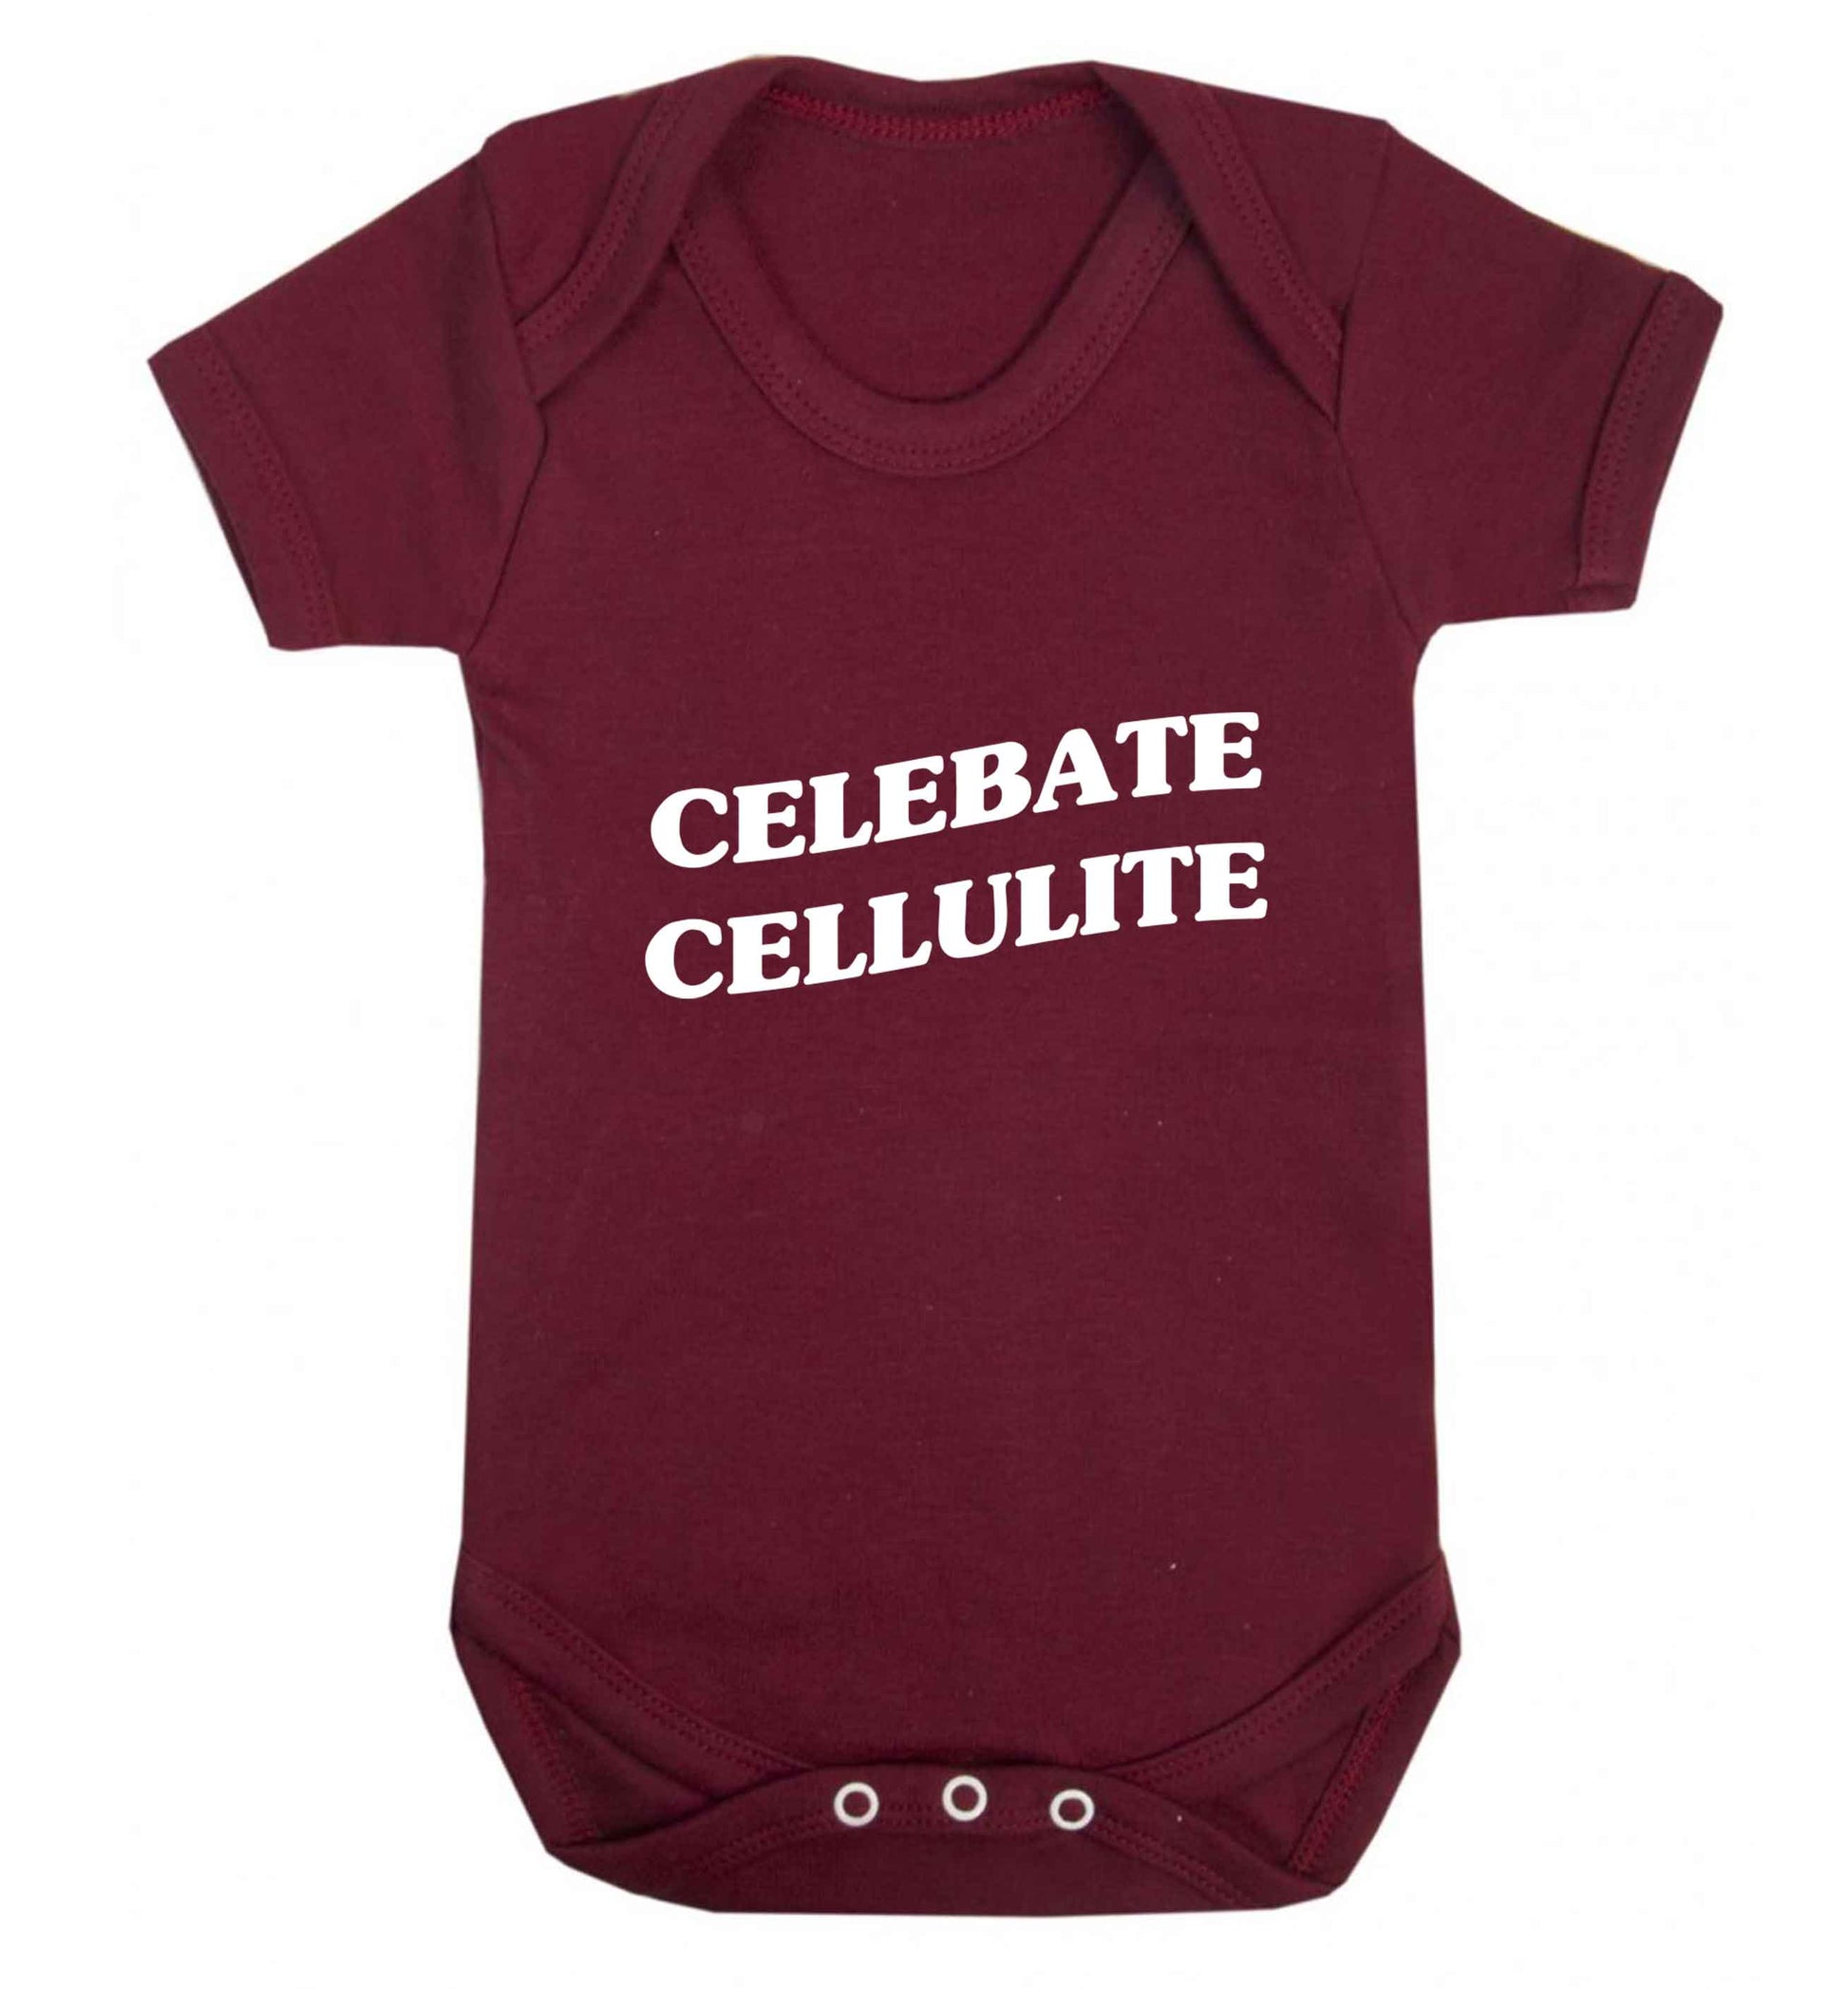 Celebrate cellulite baby vest maroon 18-24 months